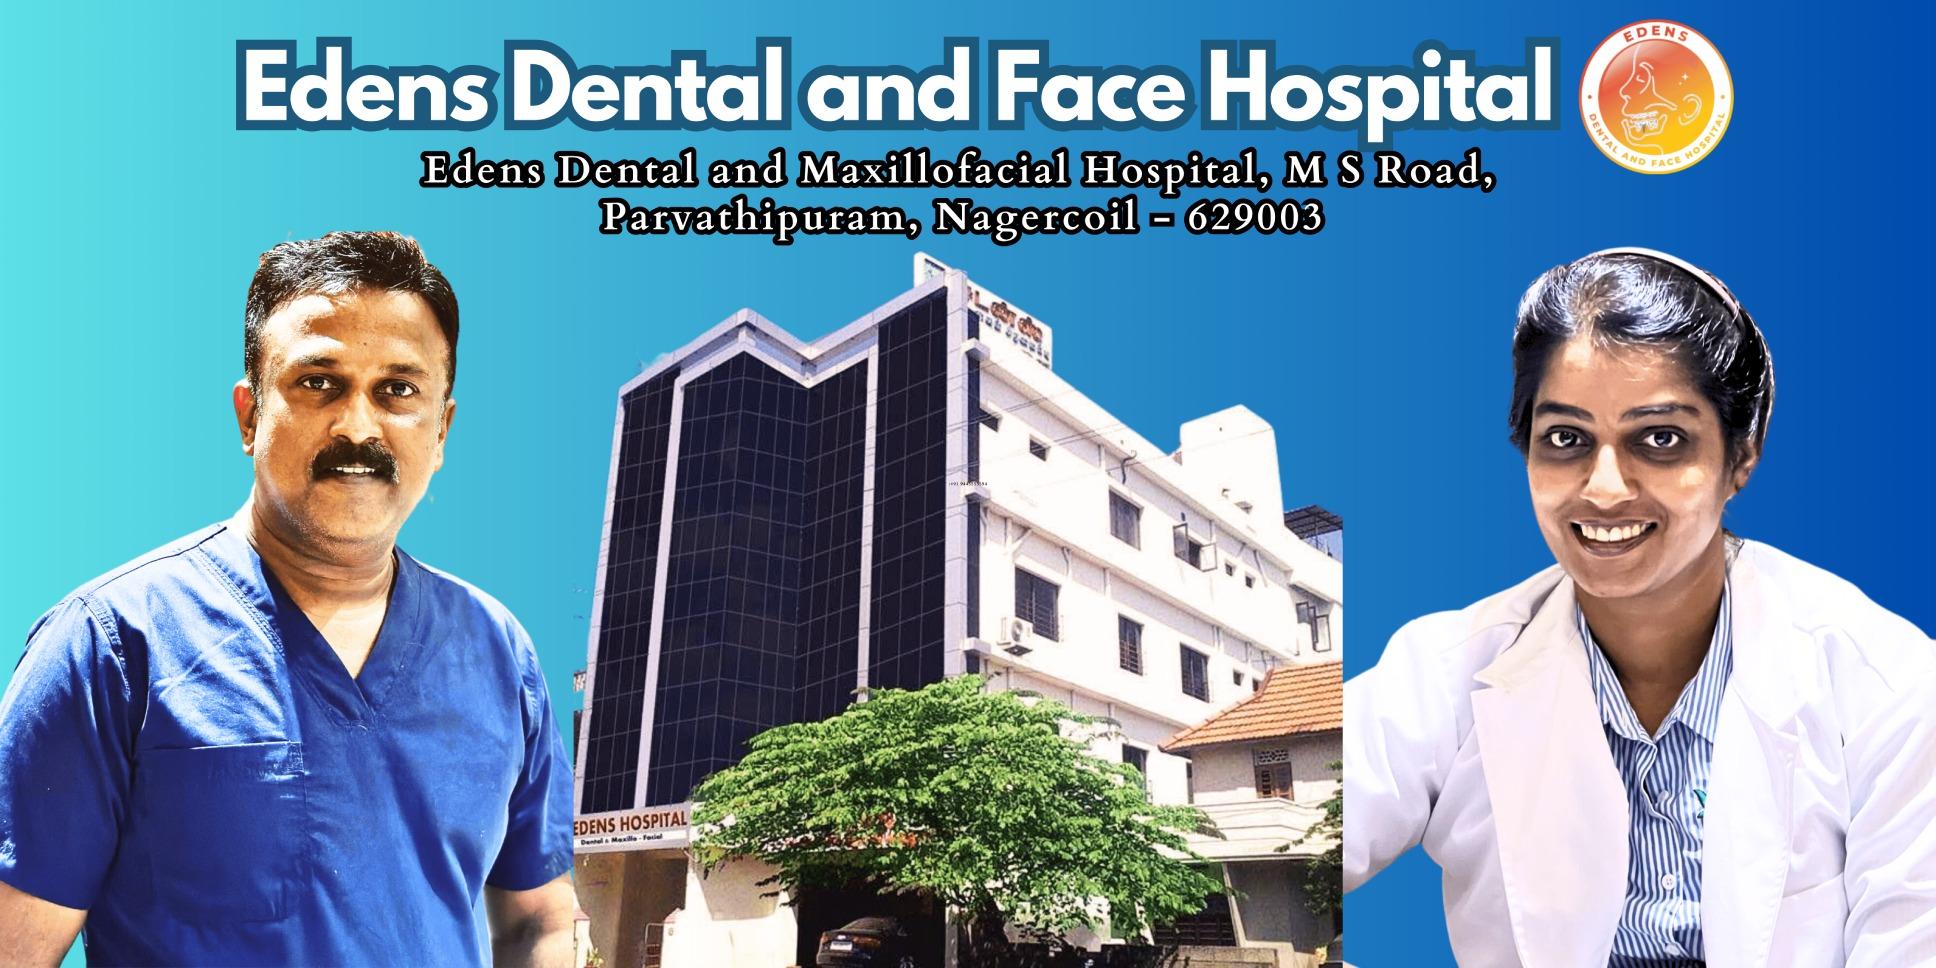 The Best Dental Hospital in Tamil Nadu: Edens Dental